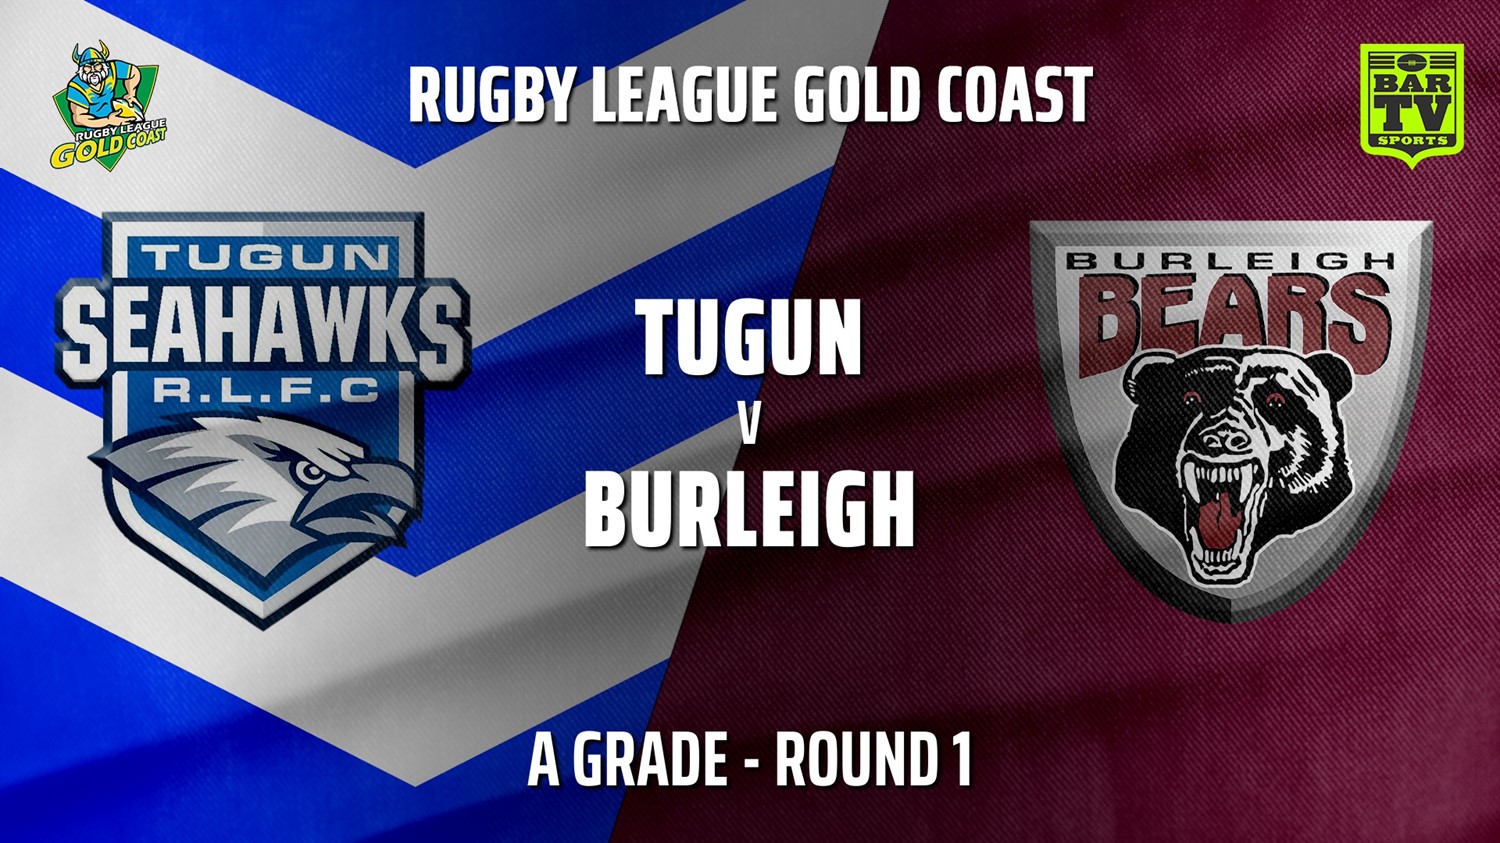 210508-RLGC Round 1 - A Grade - Tugun Seahawks v Burleigh Bears Minigame Slate Image